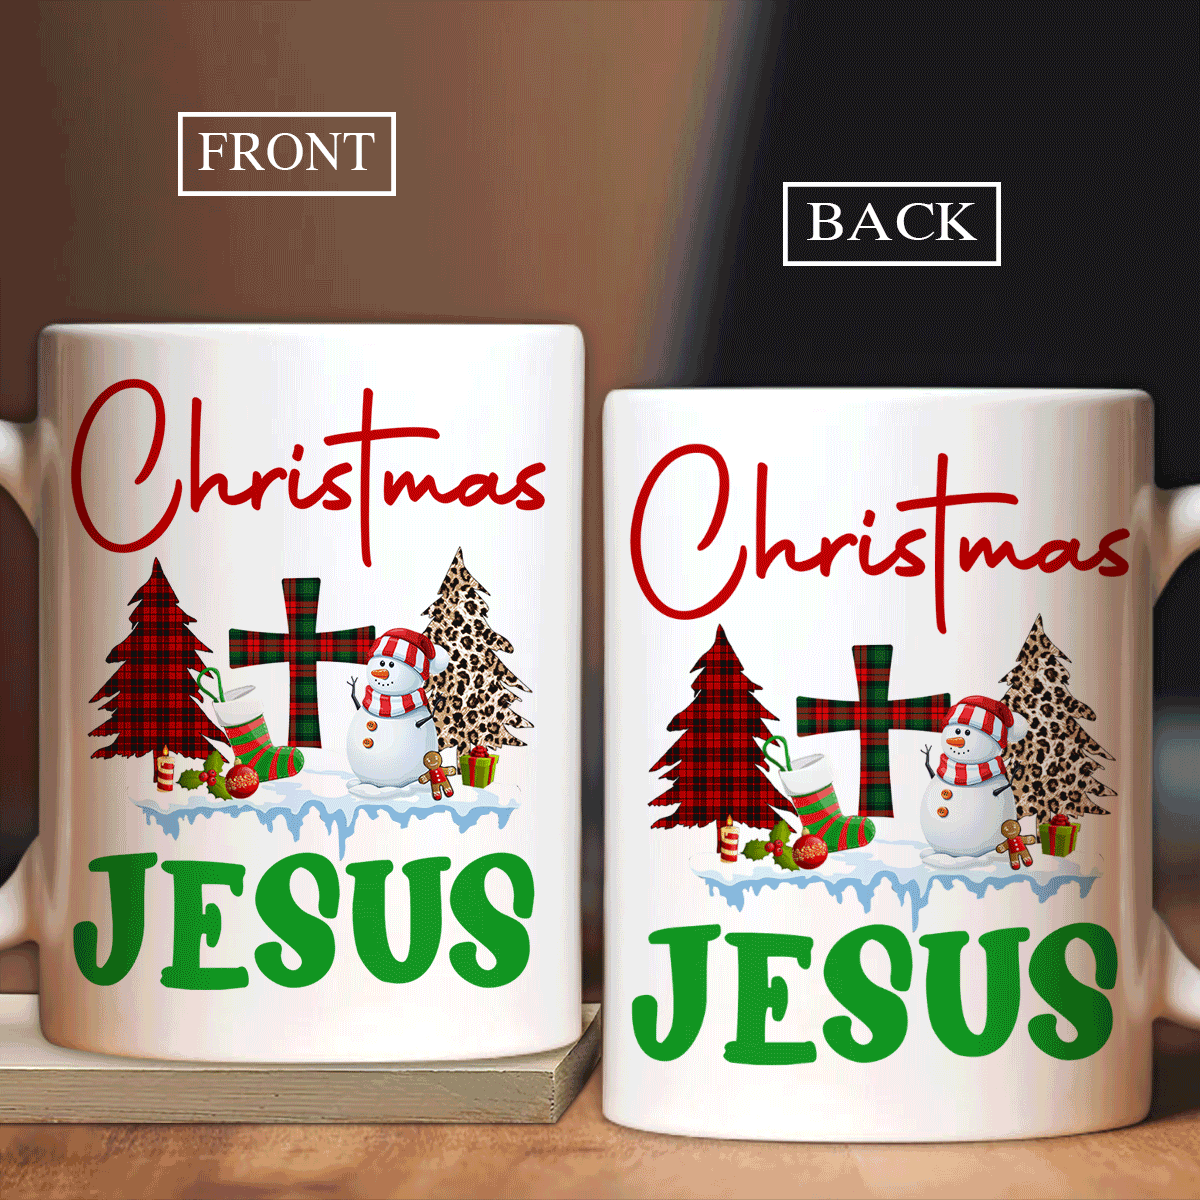 Jesus White Mug, Christian Mug Gift, Religious Mug, Faith Mug, Christmas Mug - Snowman White Mug, Winter Garden Mug, Christmas Is For Jesus